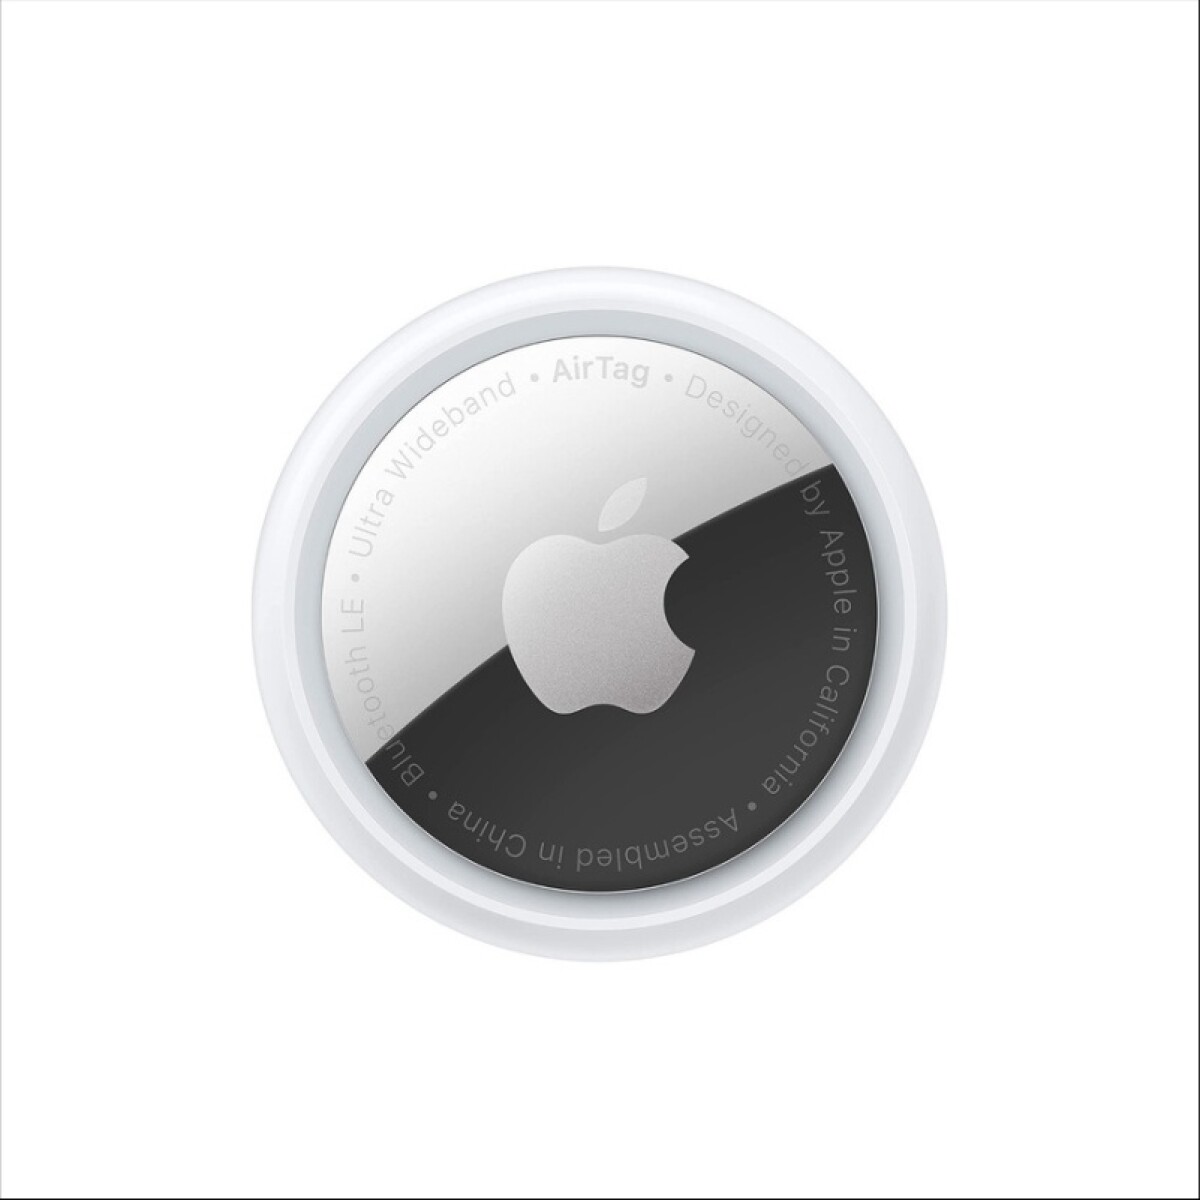 Localizador Apple AirTag MX542 Pack x4 